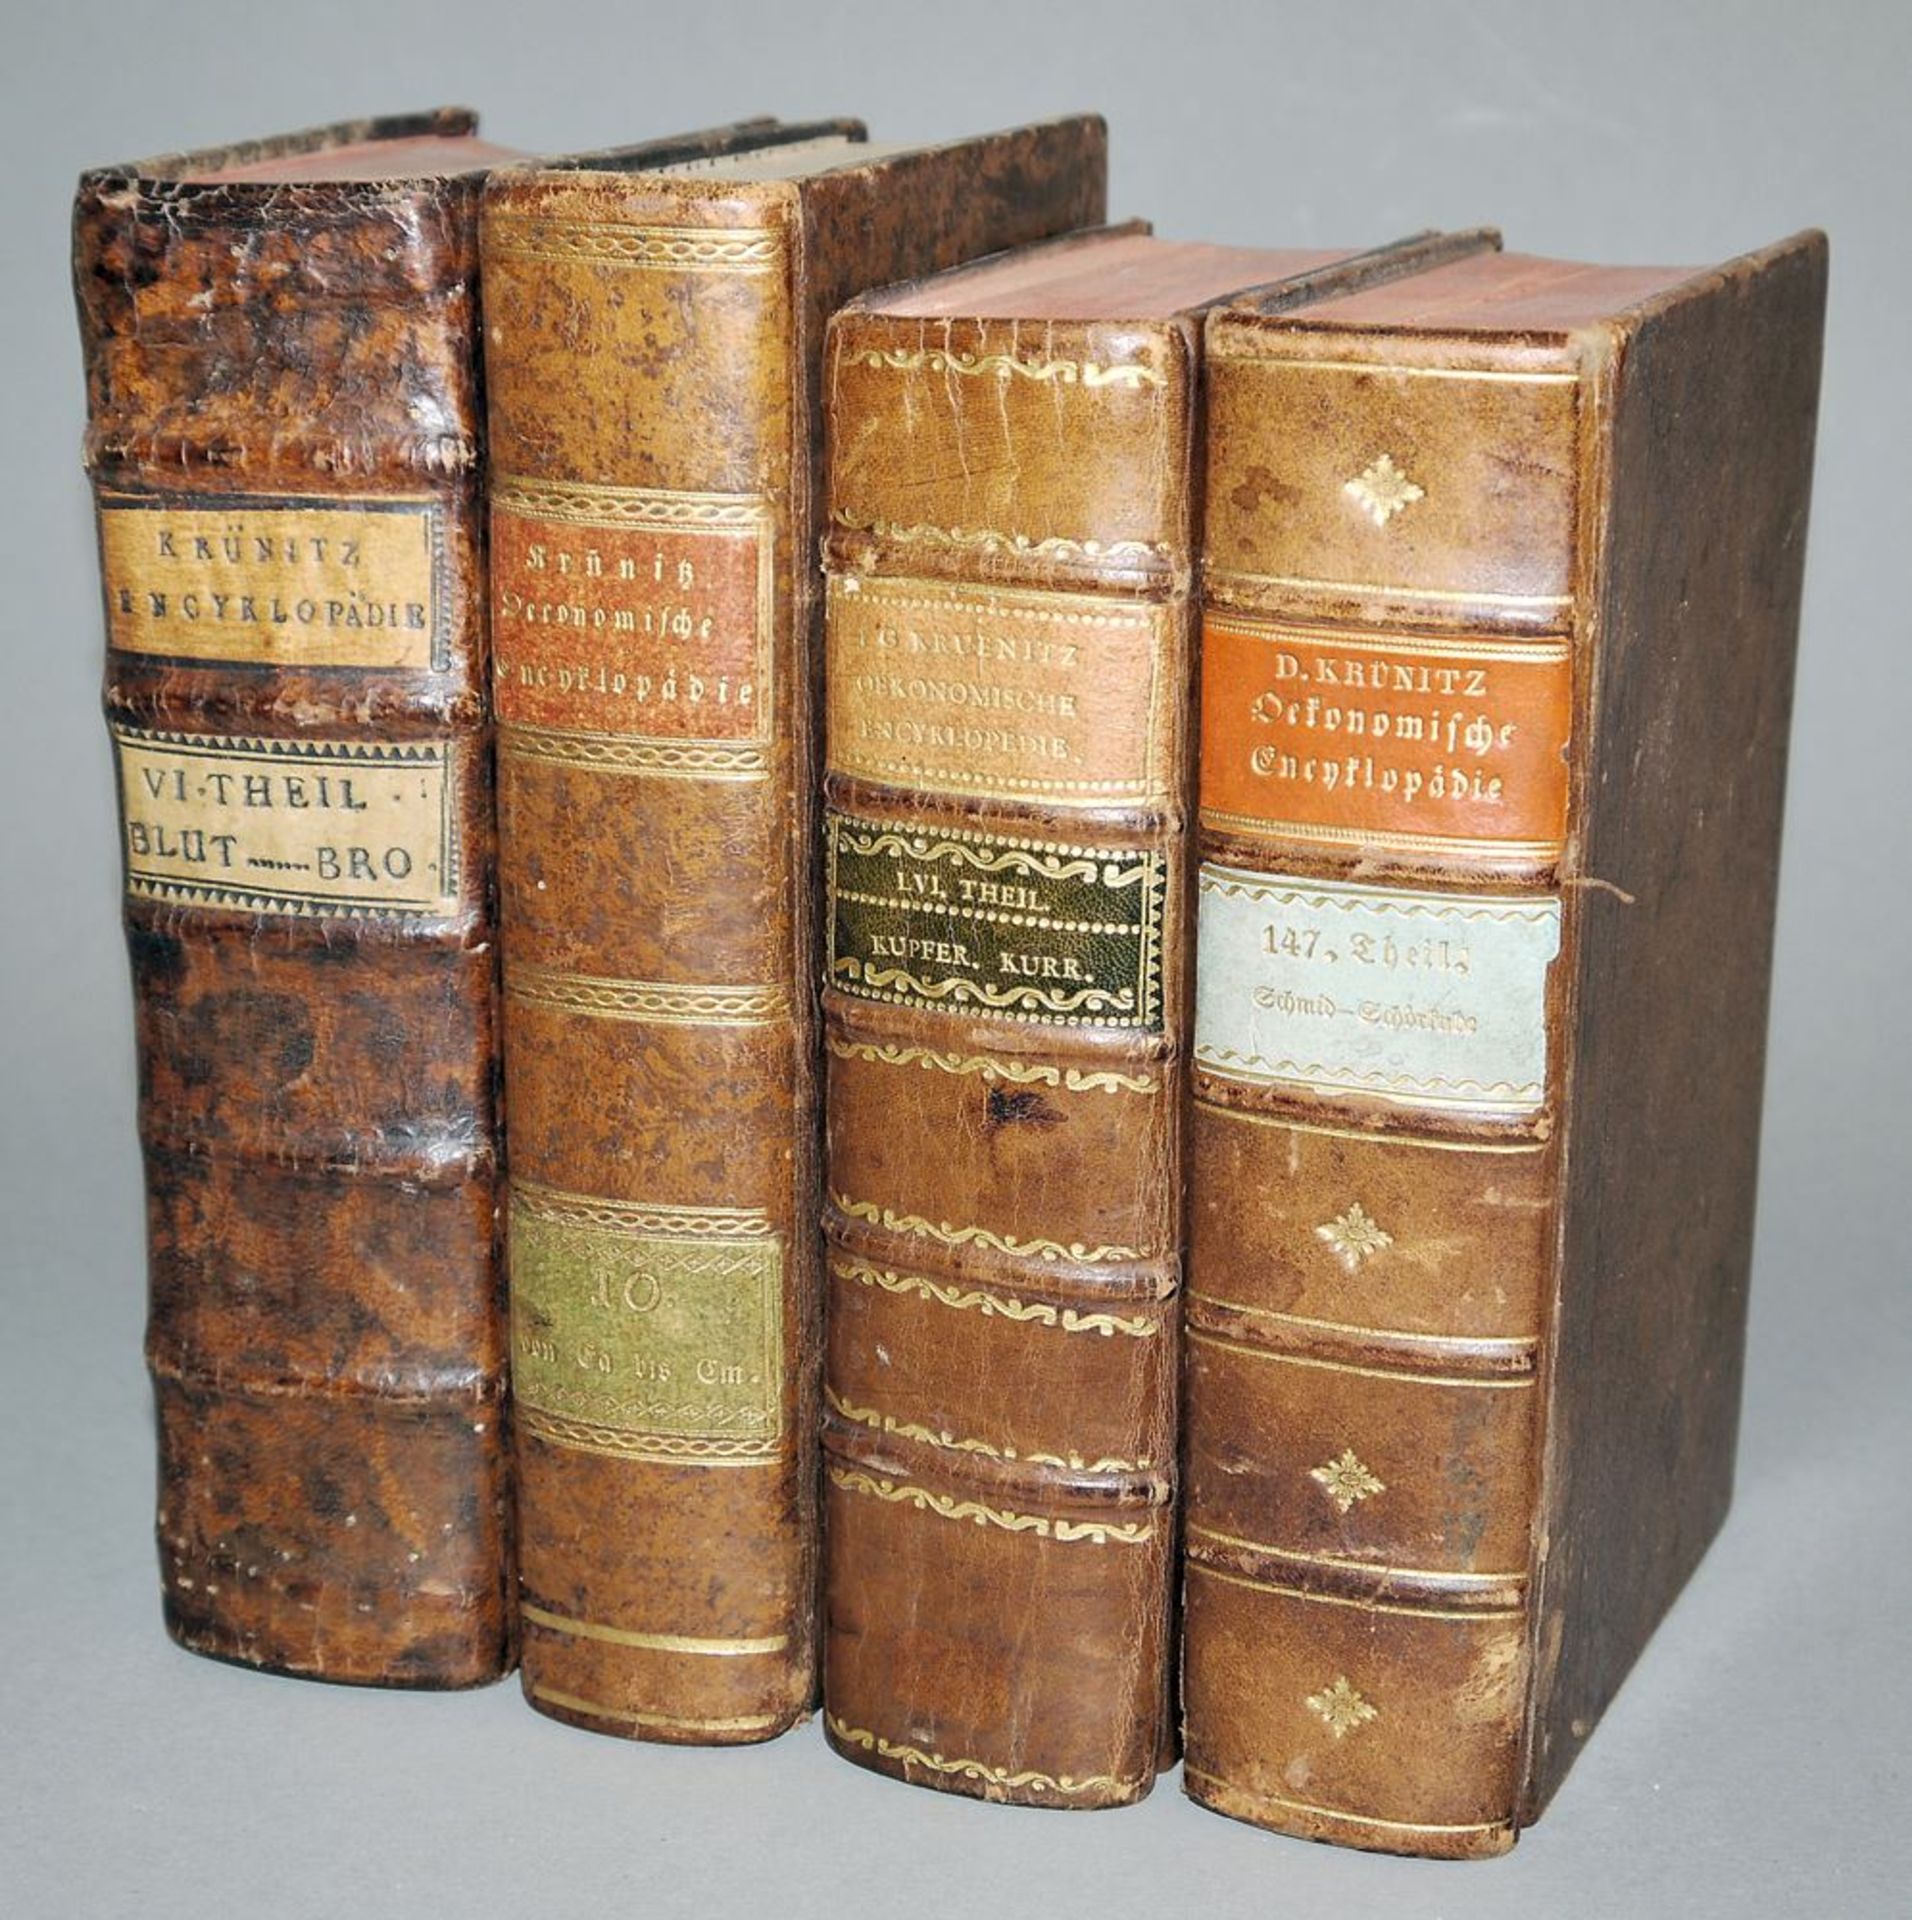 4 Bde. Dr. Johann Georg Krünitz's Ökonomisch-technologische Encyklopädie, 1787-1827